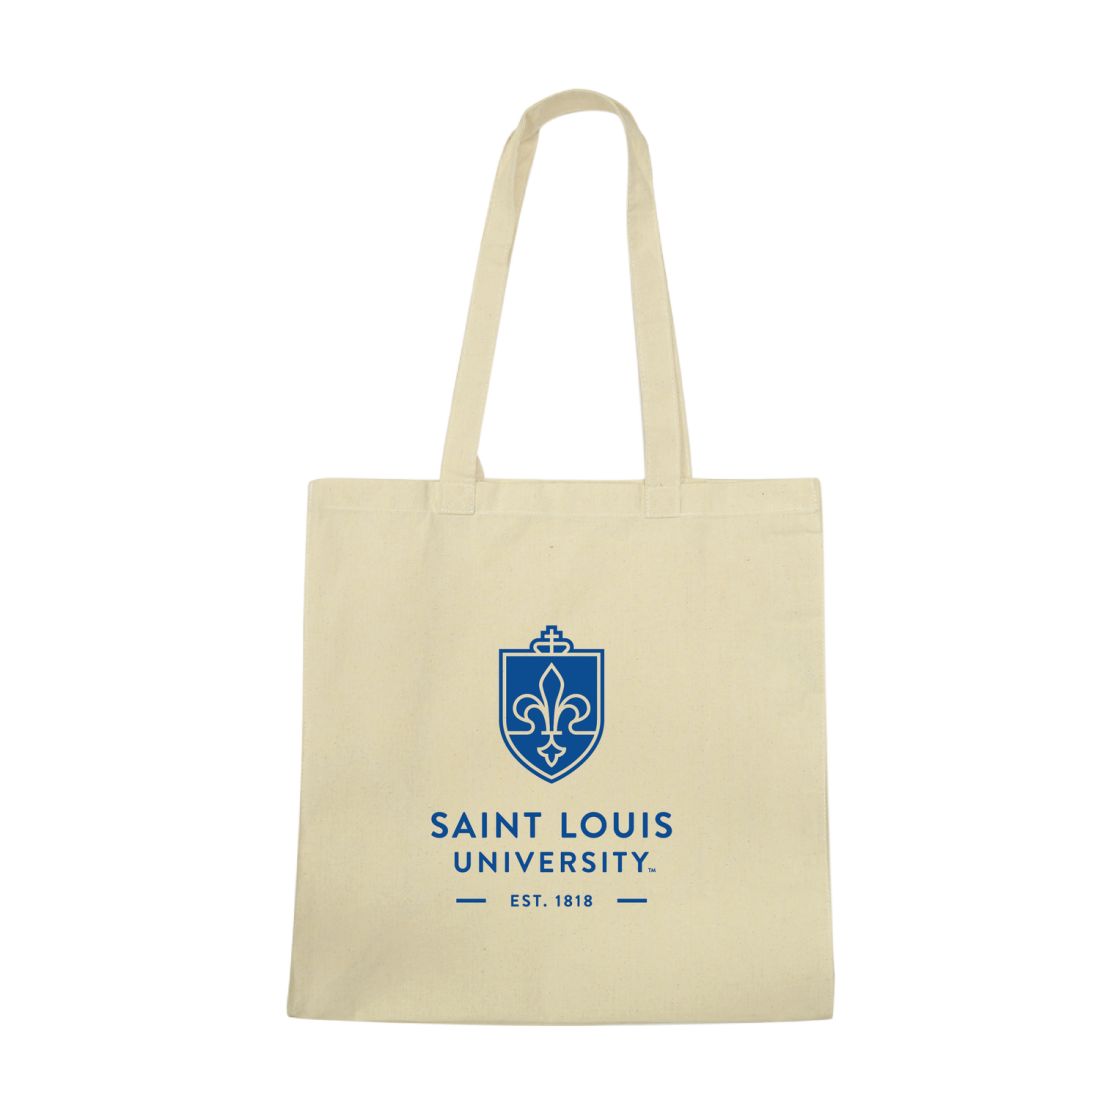 Saint Louis University Campus Tote Bag